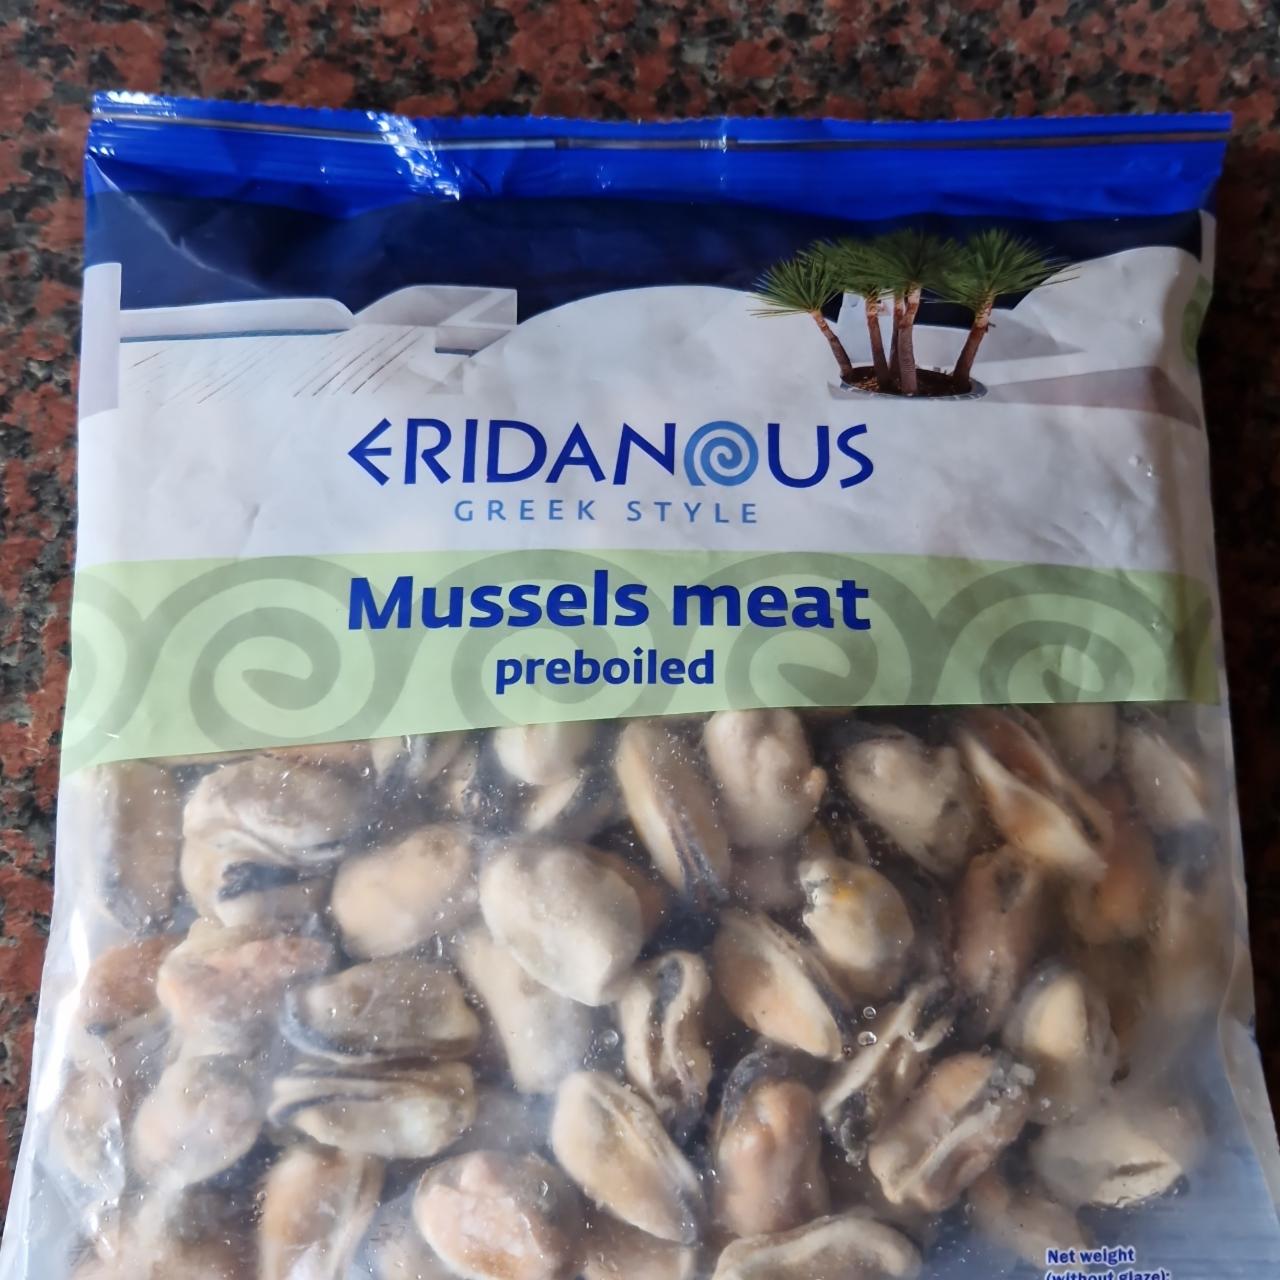 Fotografie - Mussels meat preboiled Eridanous